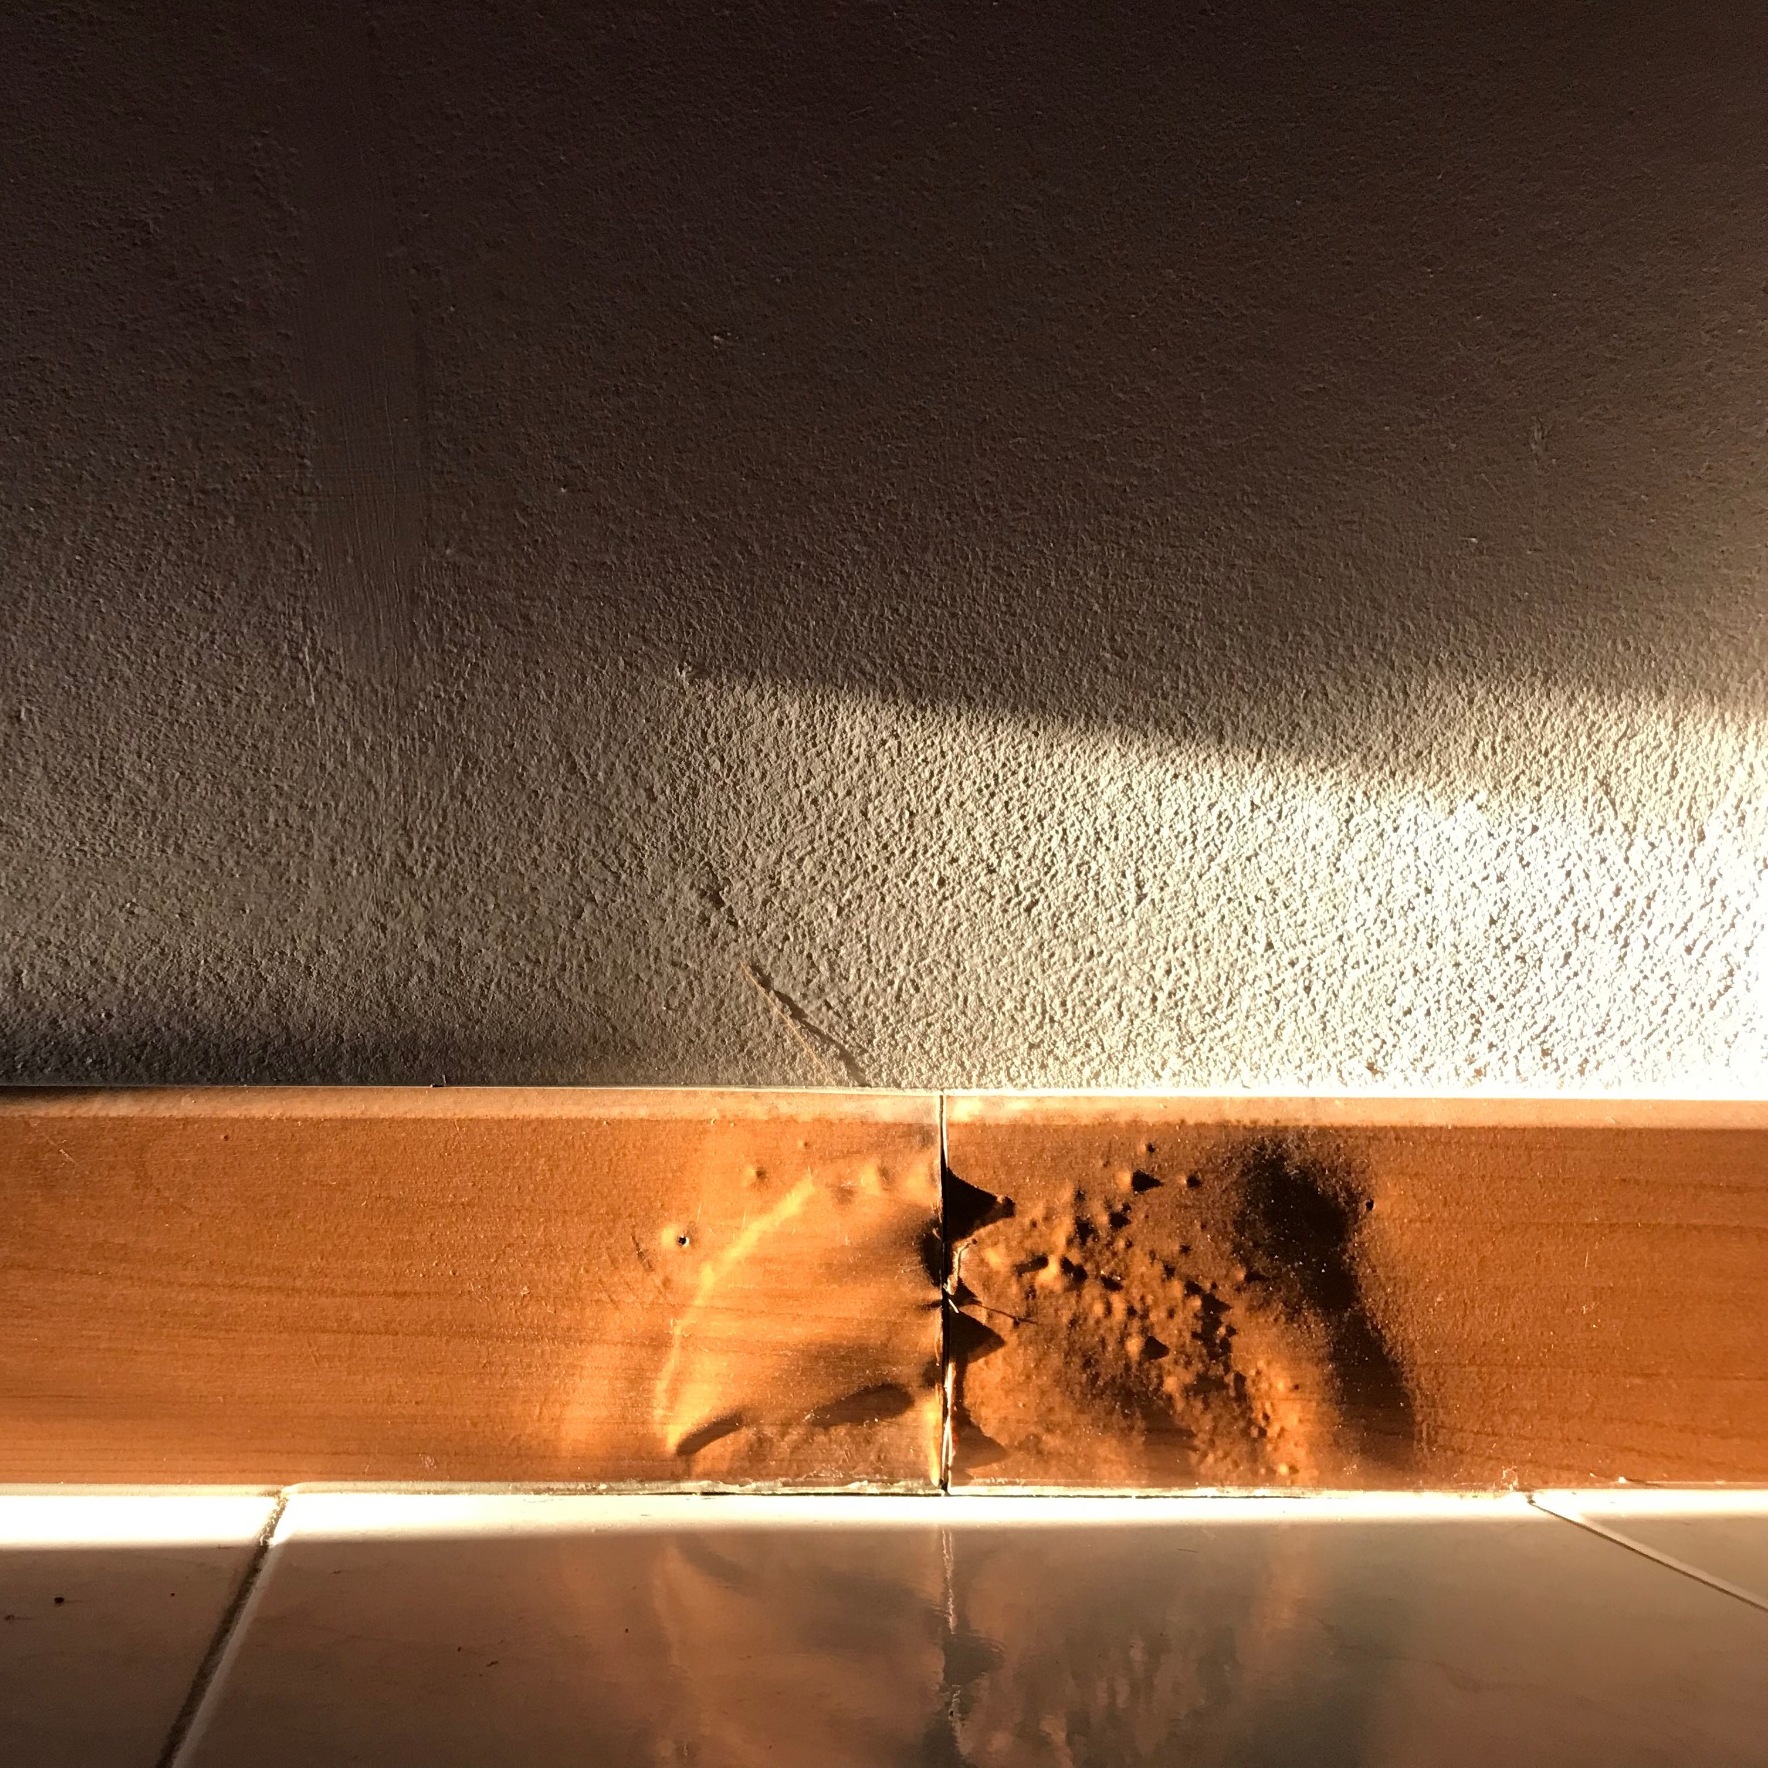 water damage on floor bannister